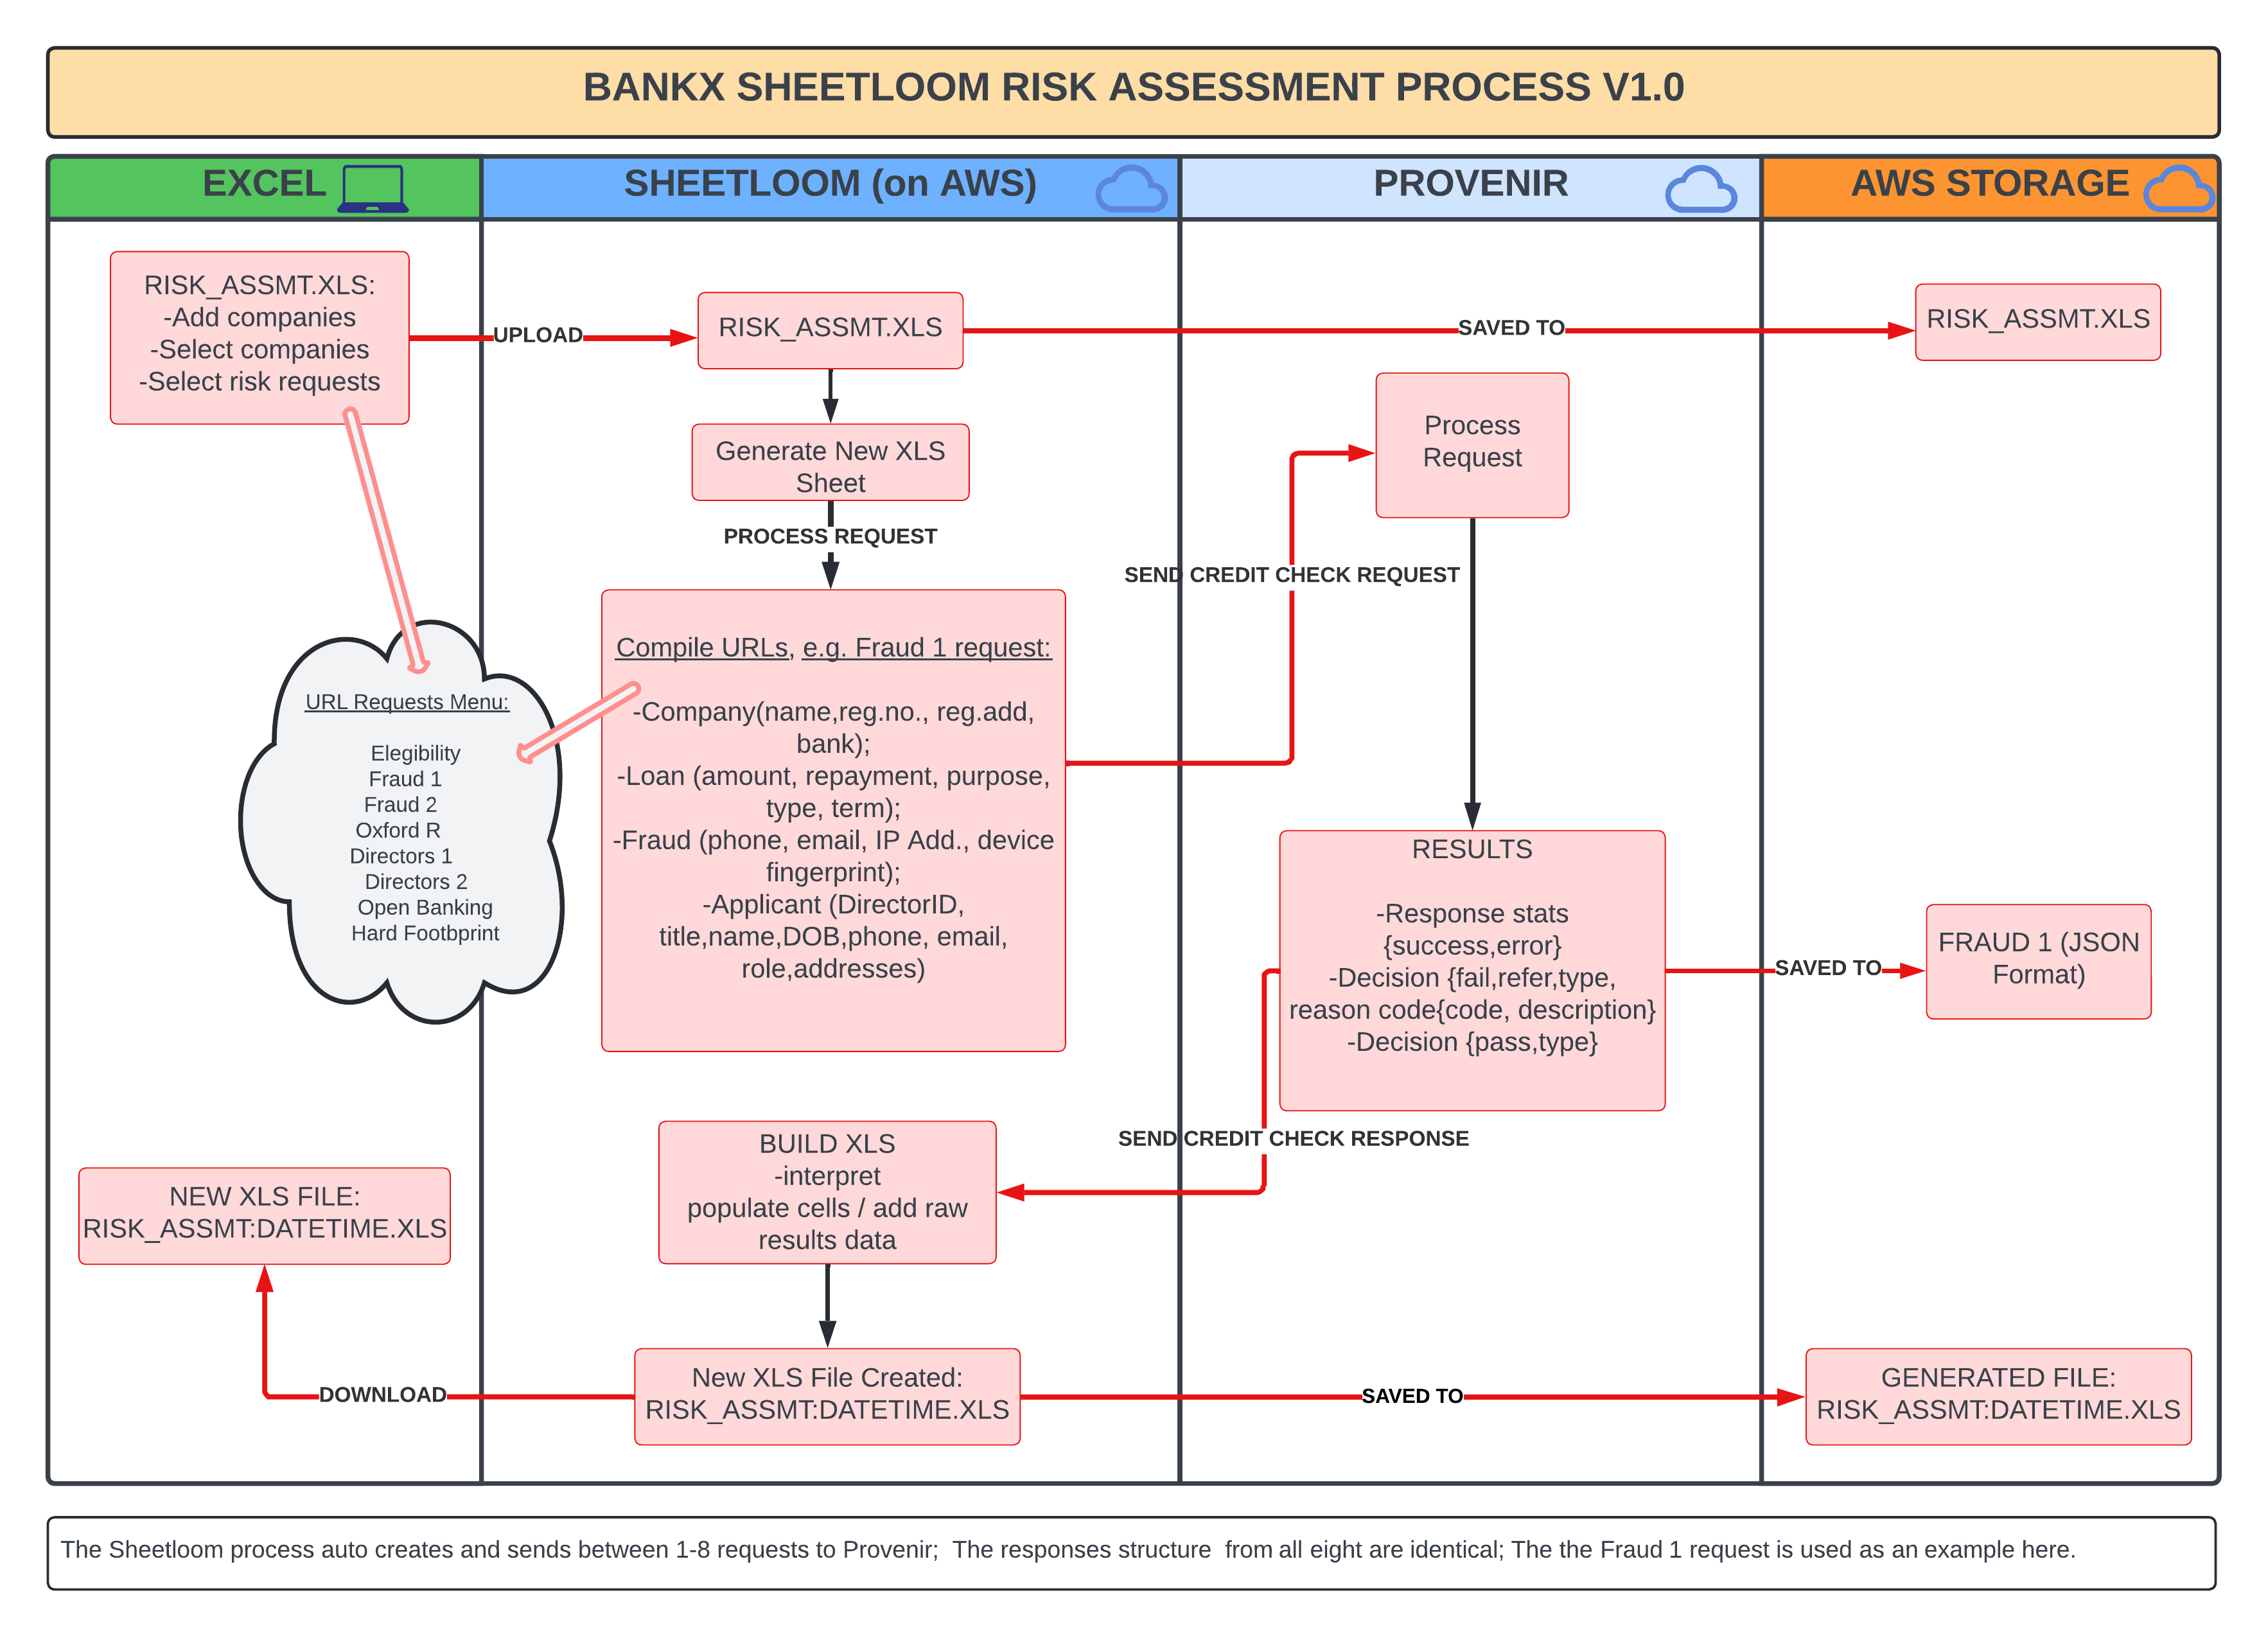 Assessment process